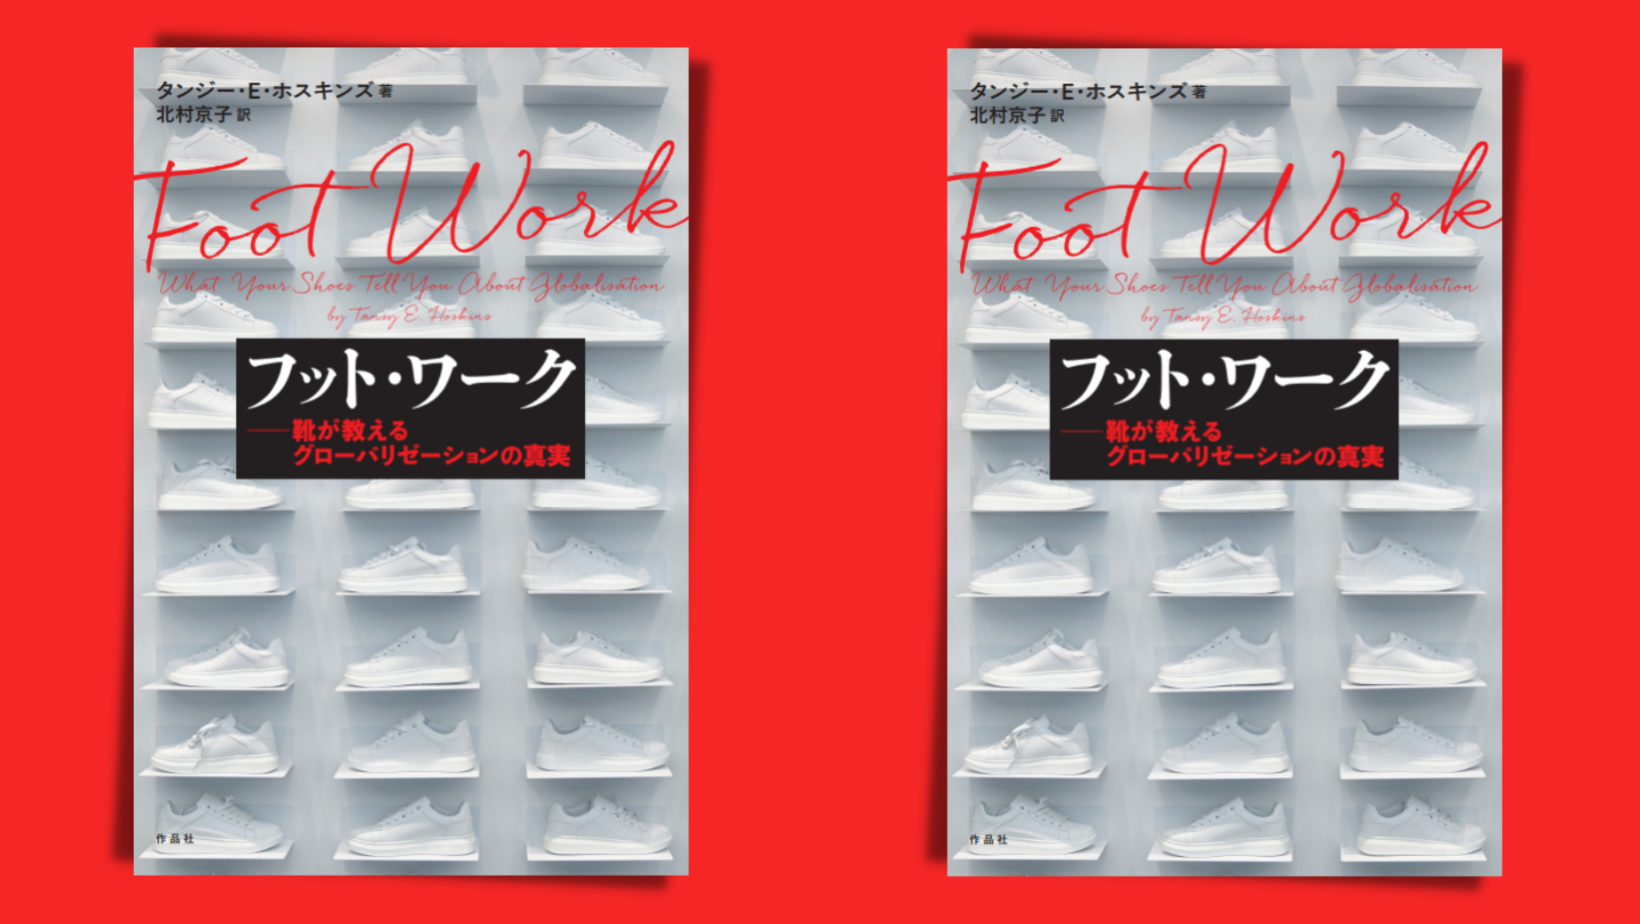 Foot Work - Japan Edition